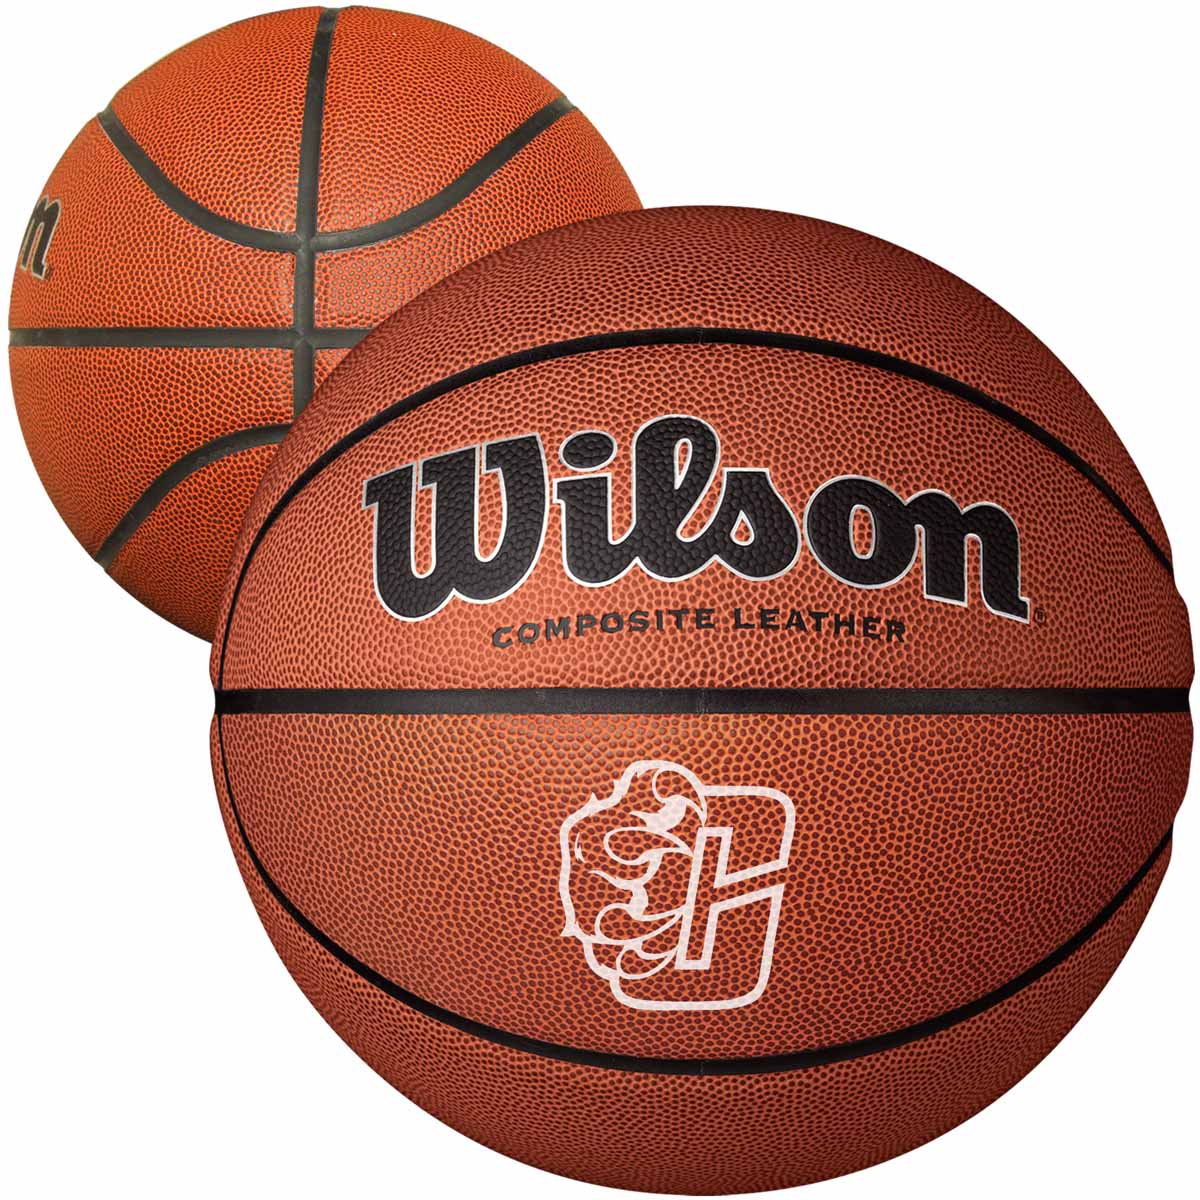 9" Wilson Composite Leather Basketballs (Full-Size)